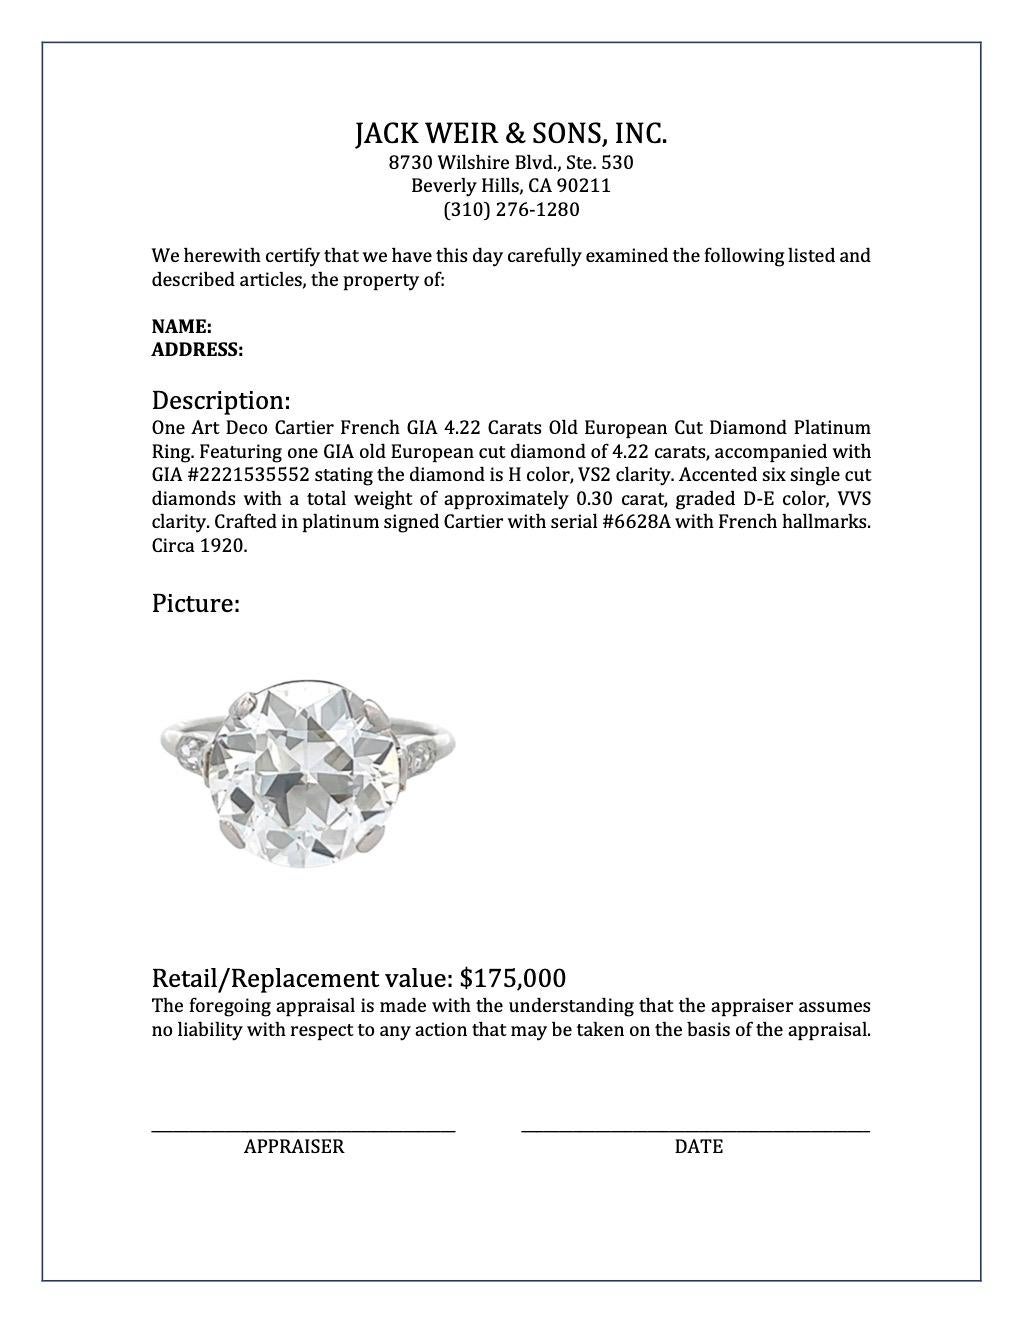 Art Deco Cartier French GIA 4.22 Carats Old European Cut Diamond Platinum Ring 4